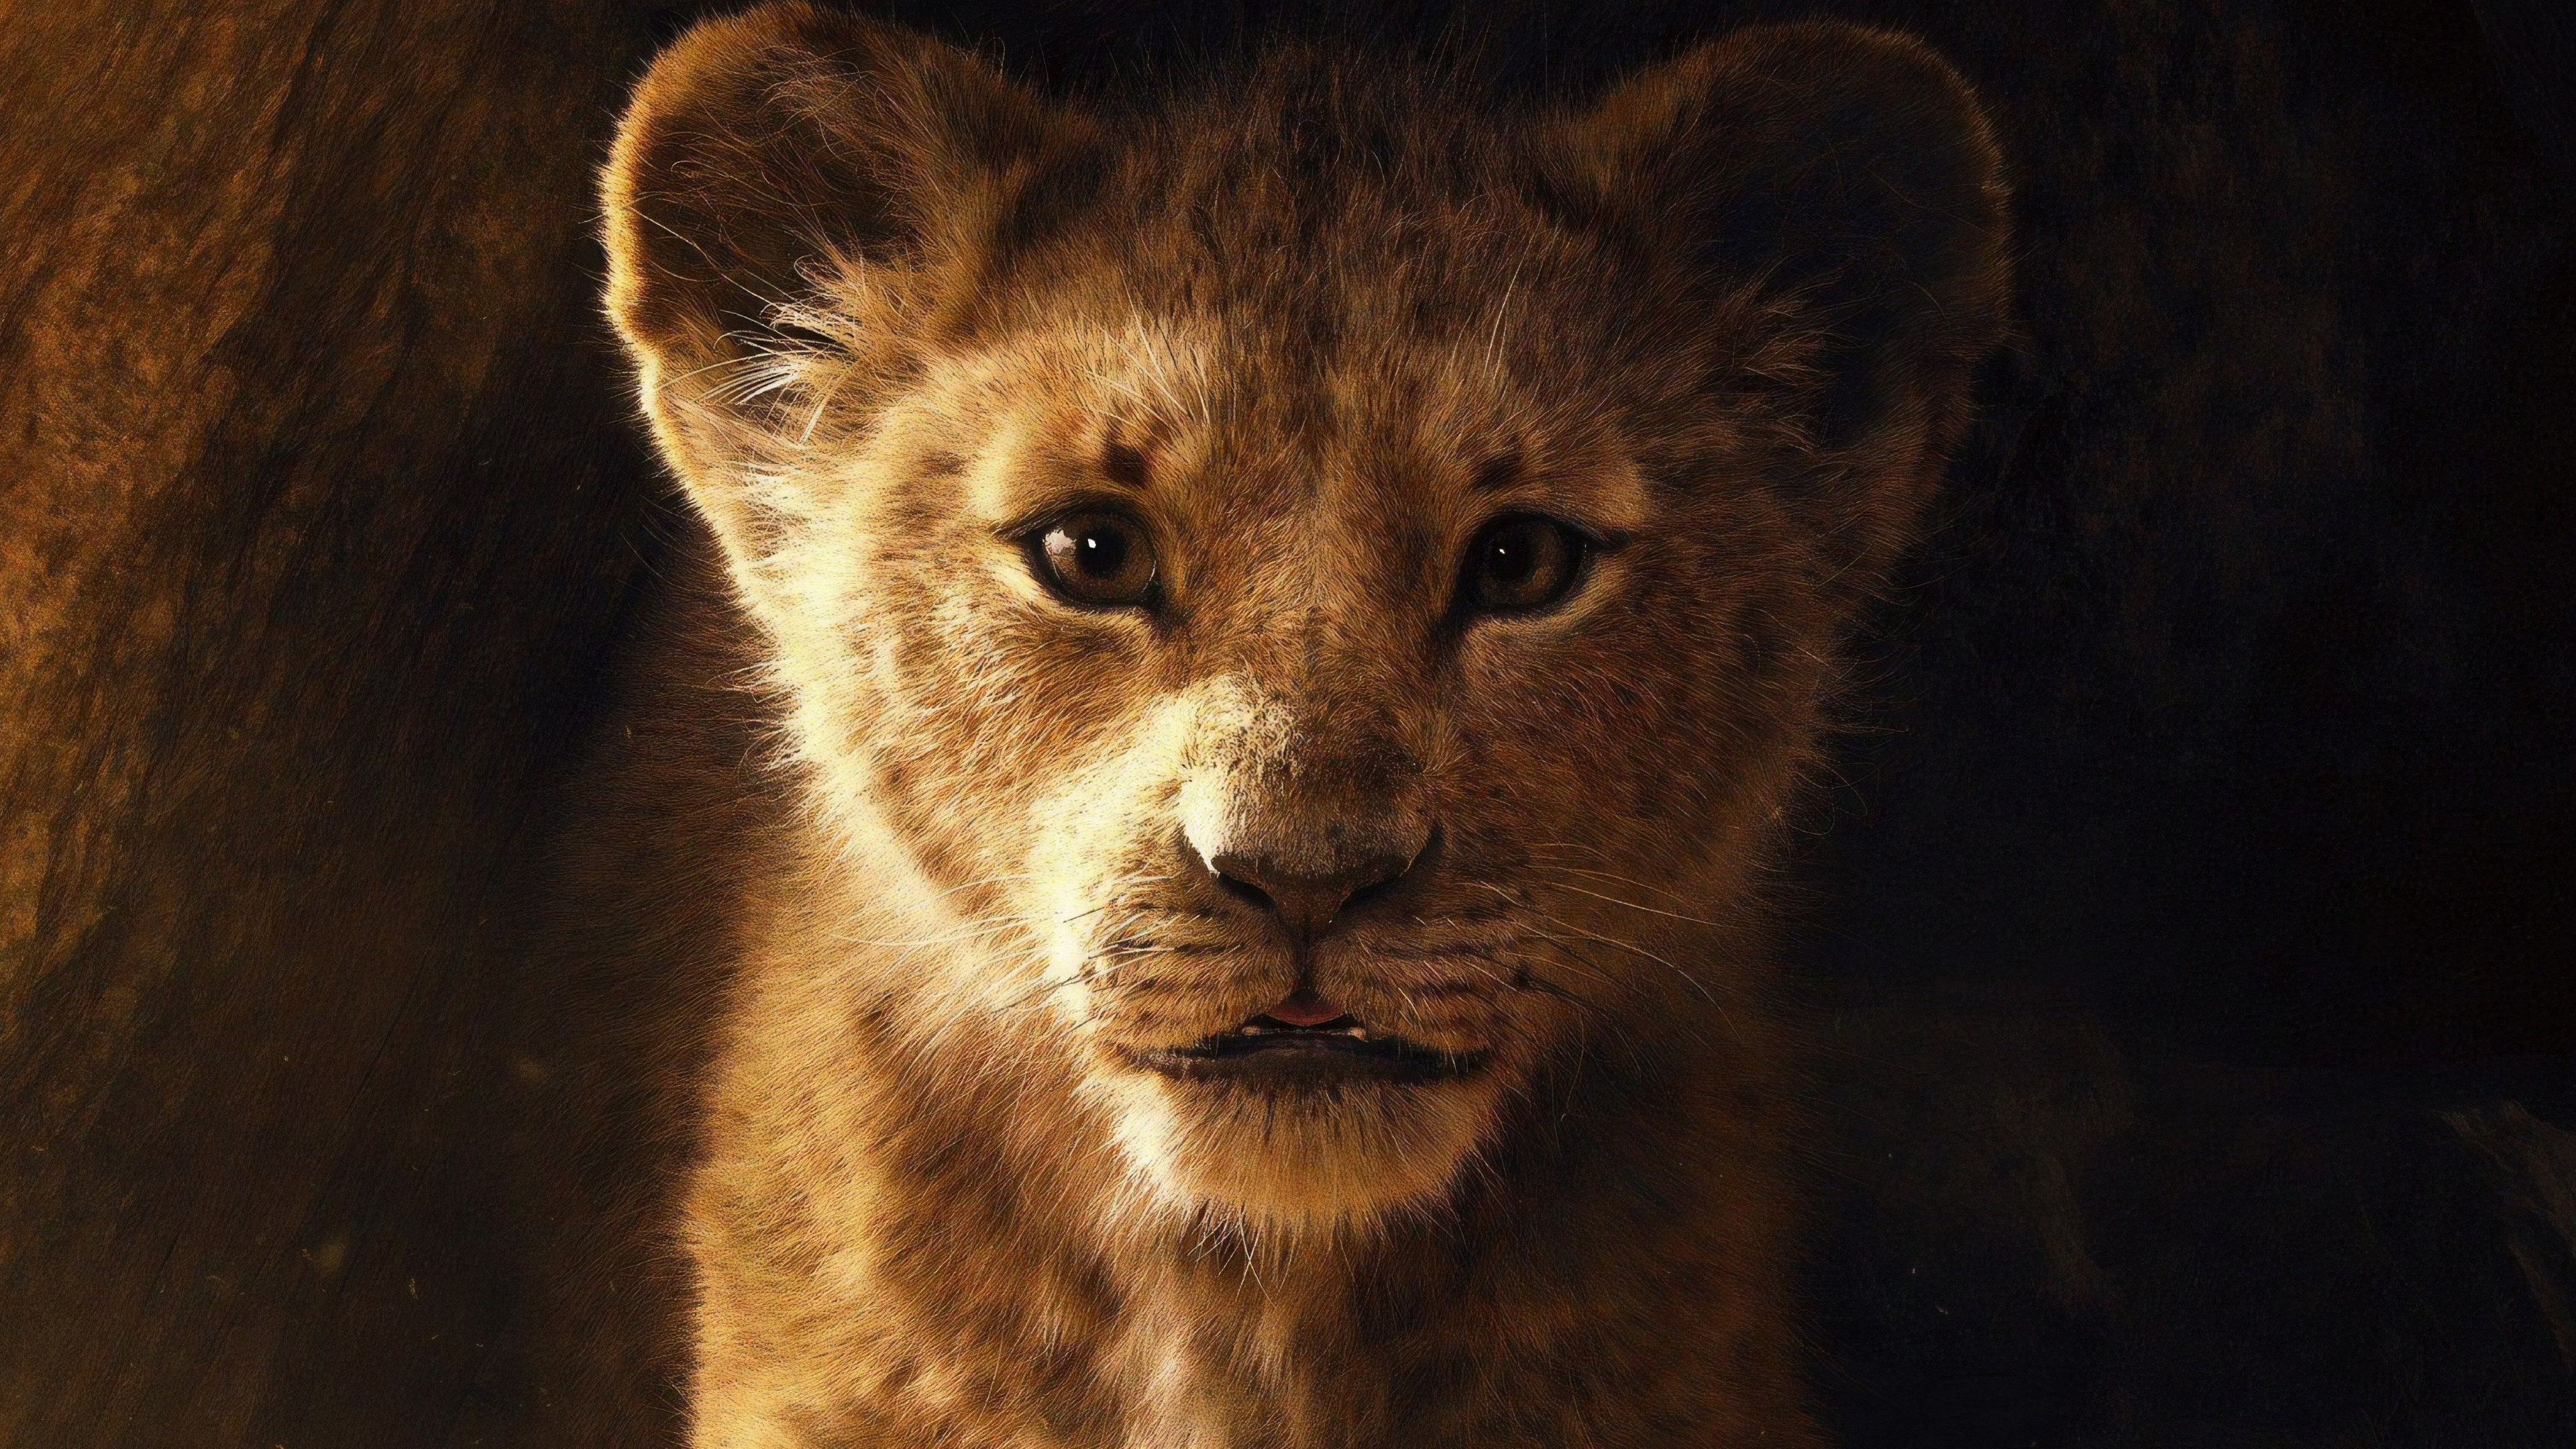 The Lion King 2019 wallpaper 3840x2160